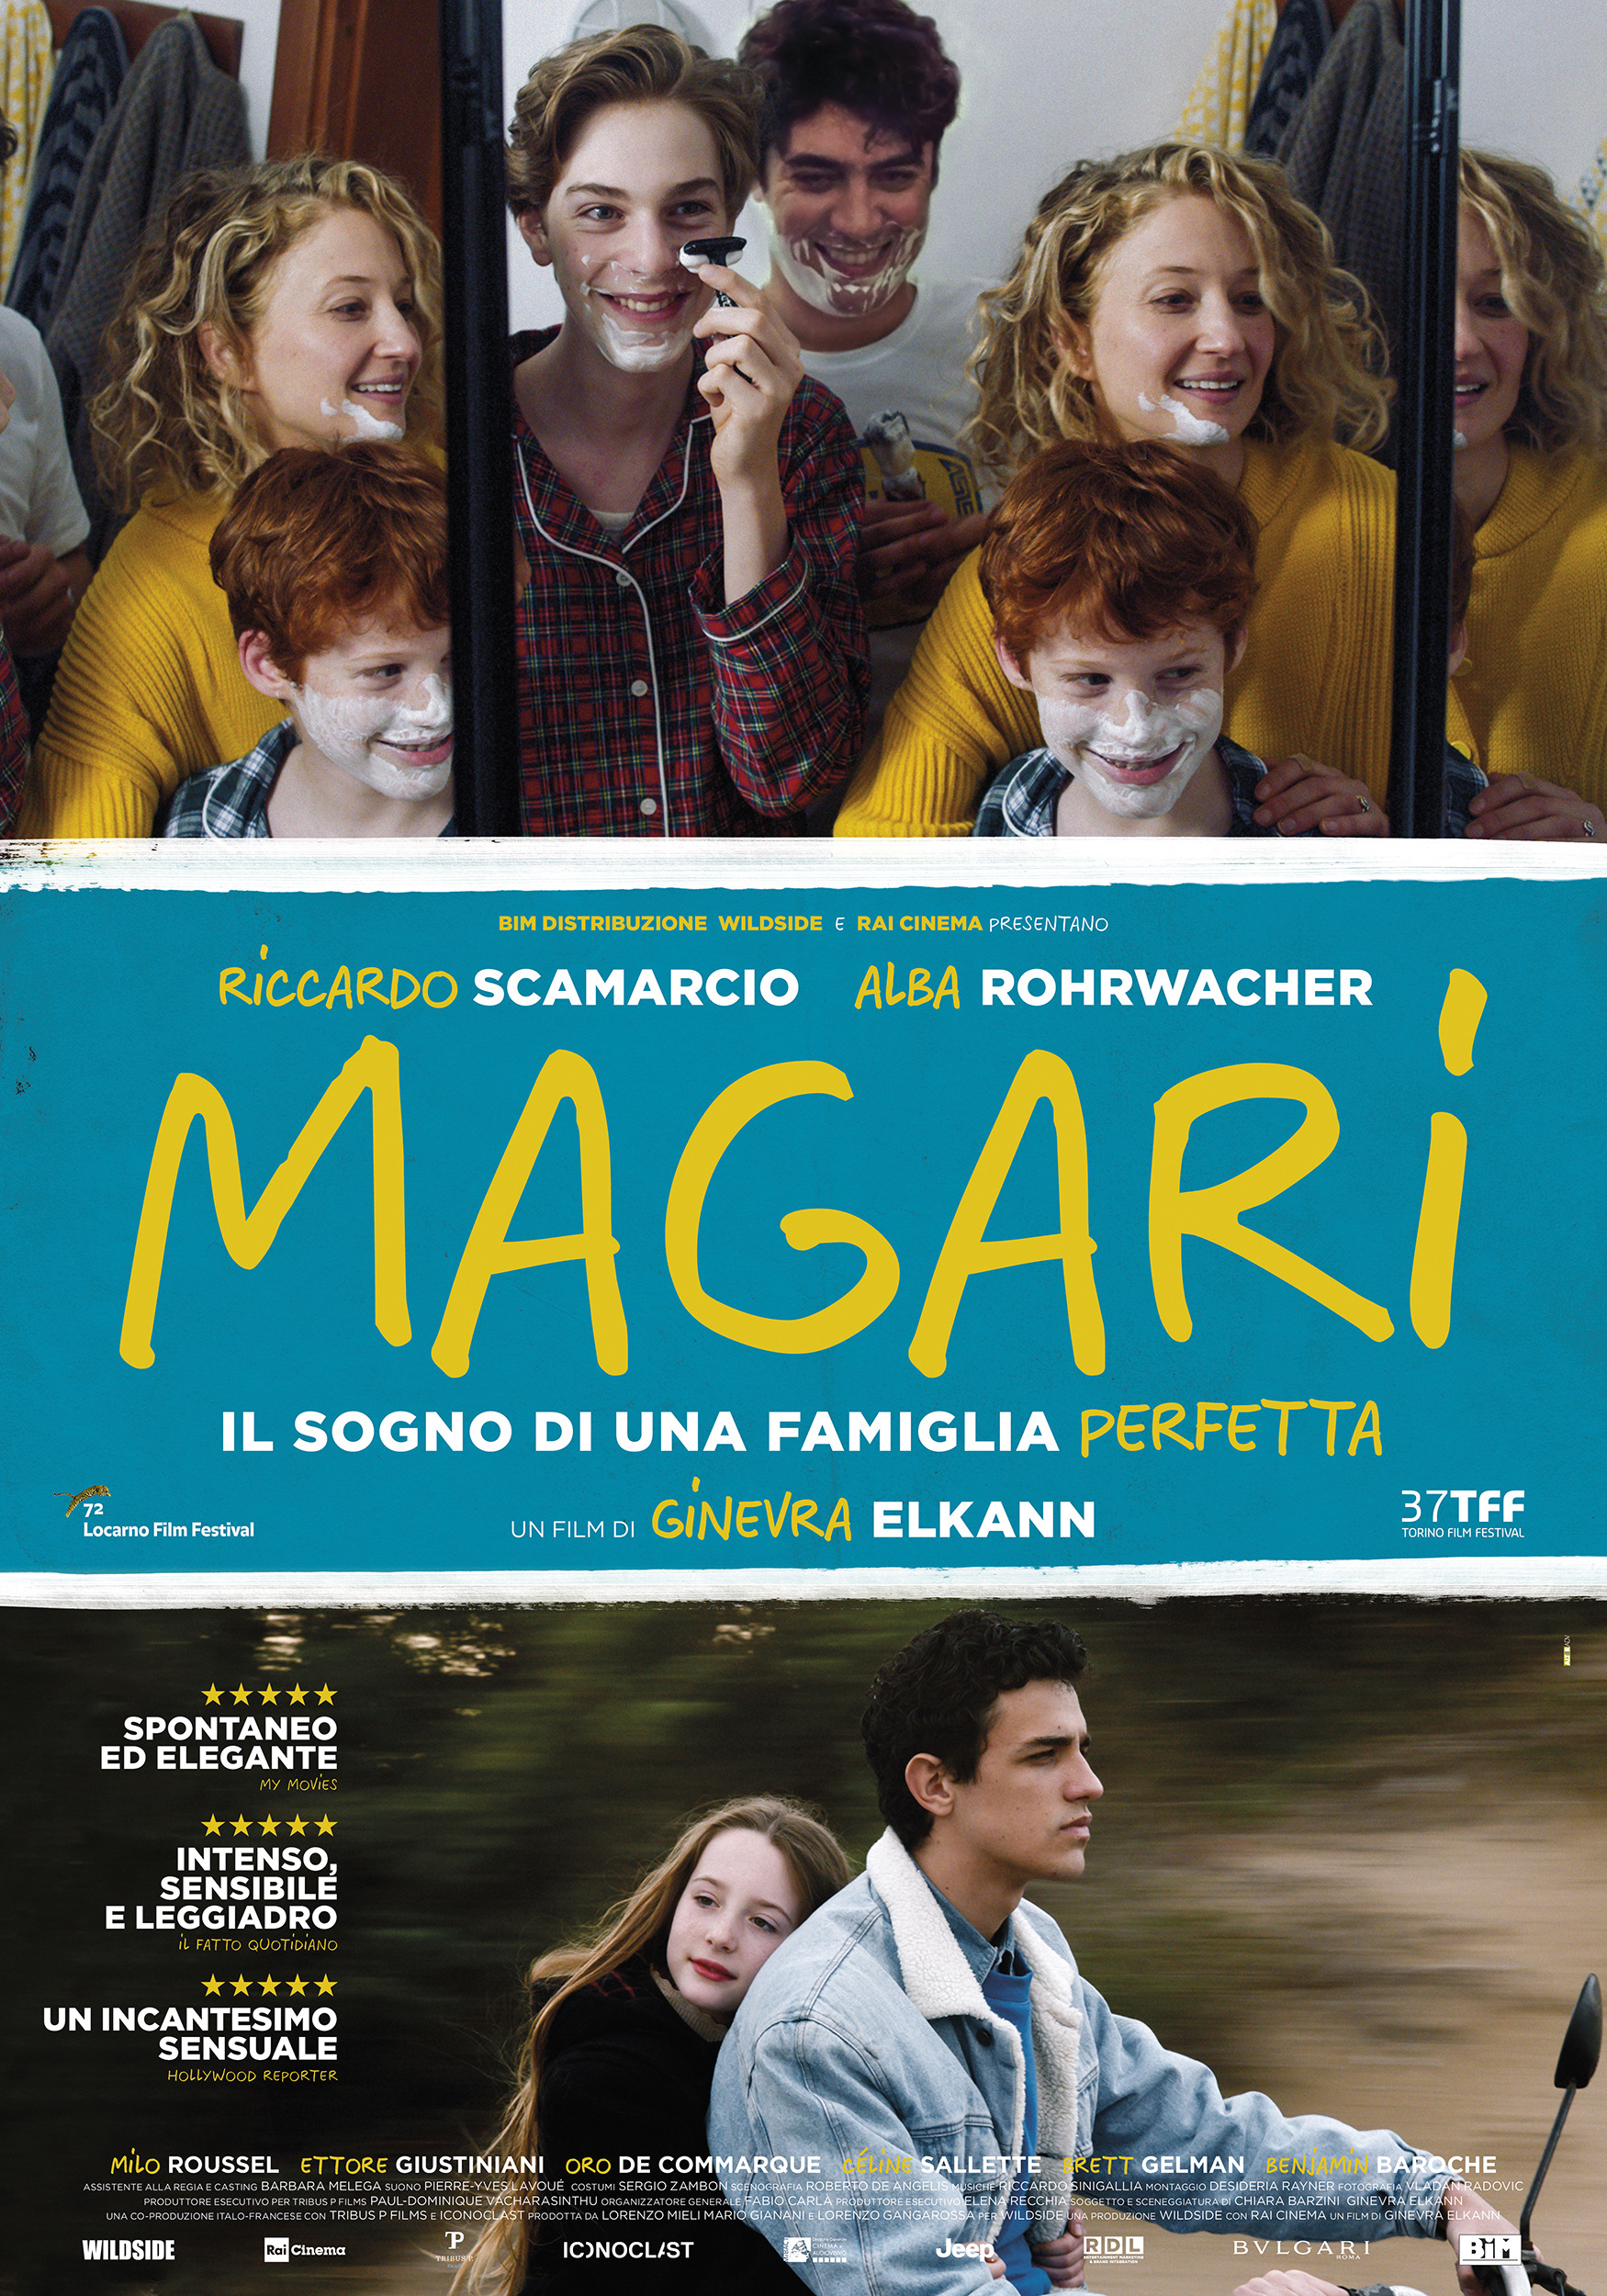 Mega Sized Movie Poster Image for Magari 